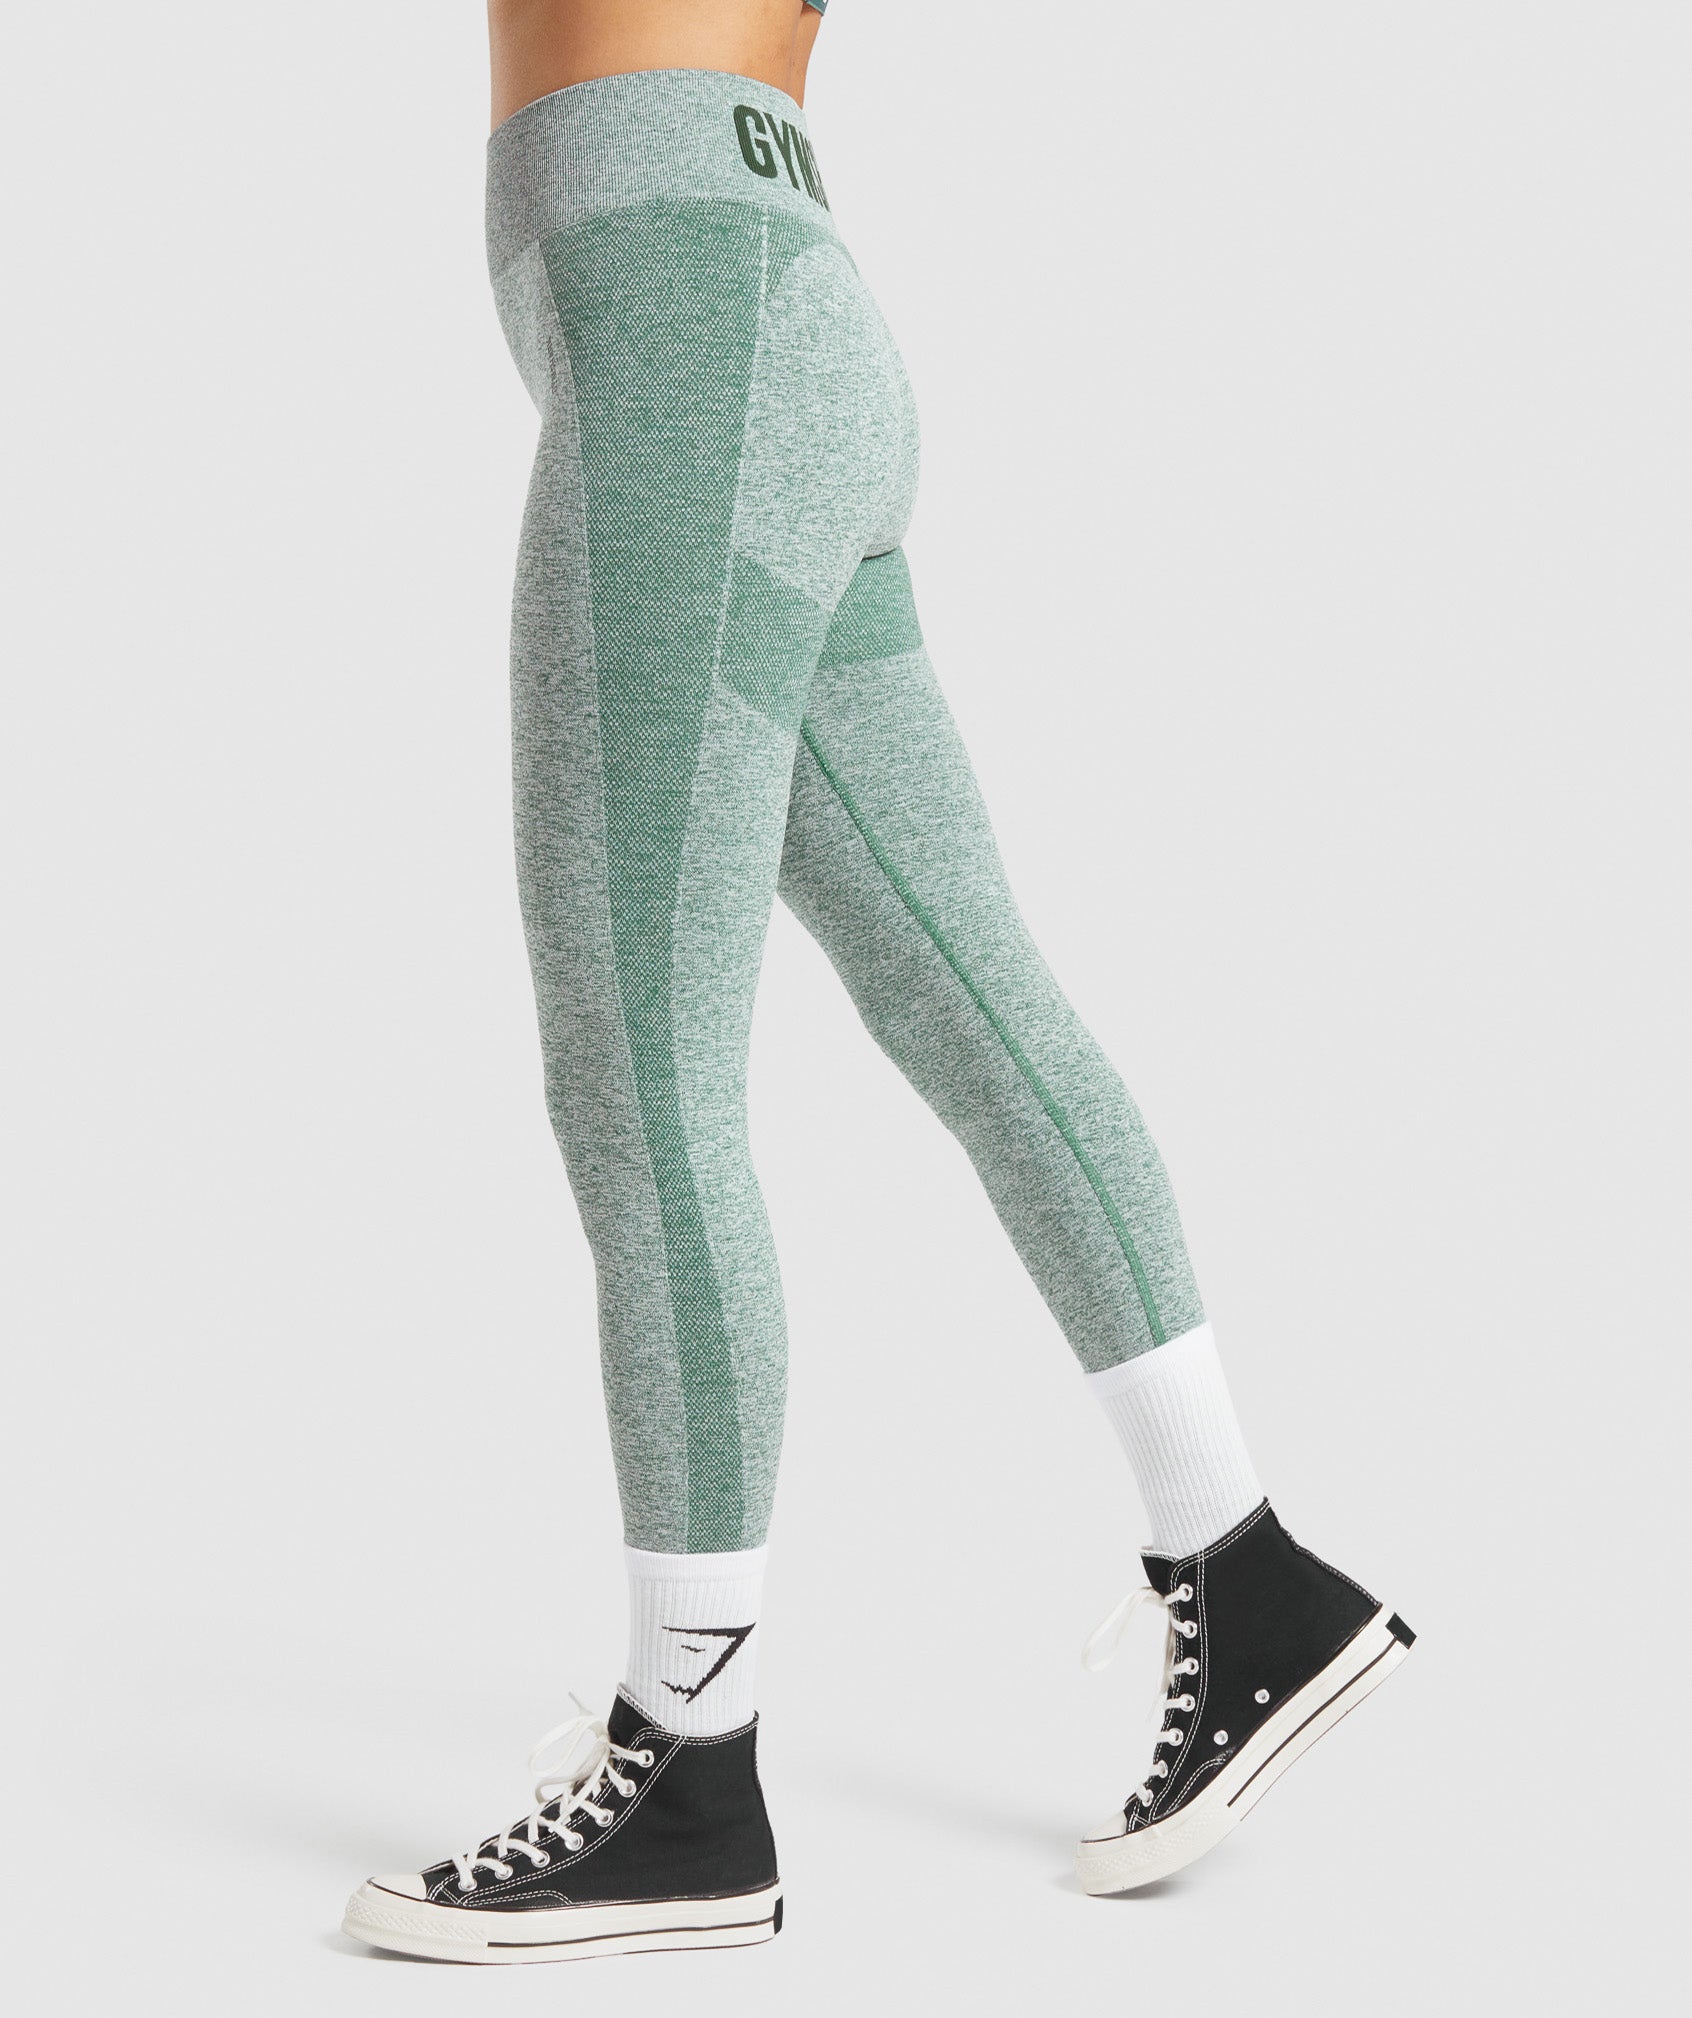 Gymshark Flex High Waist Leggings Charcoal Marled Green Women's